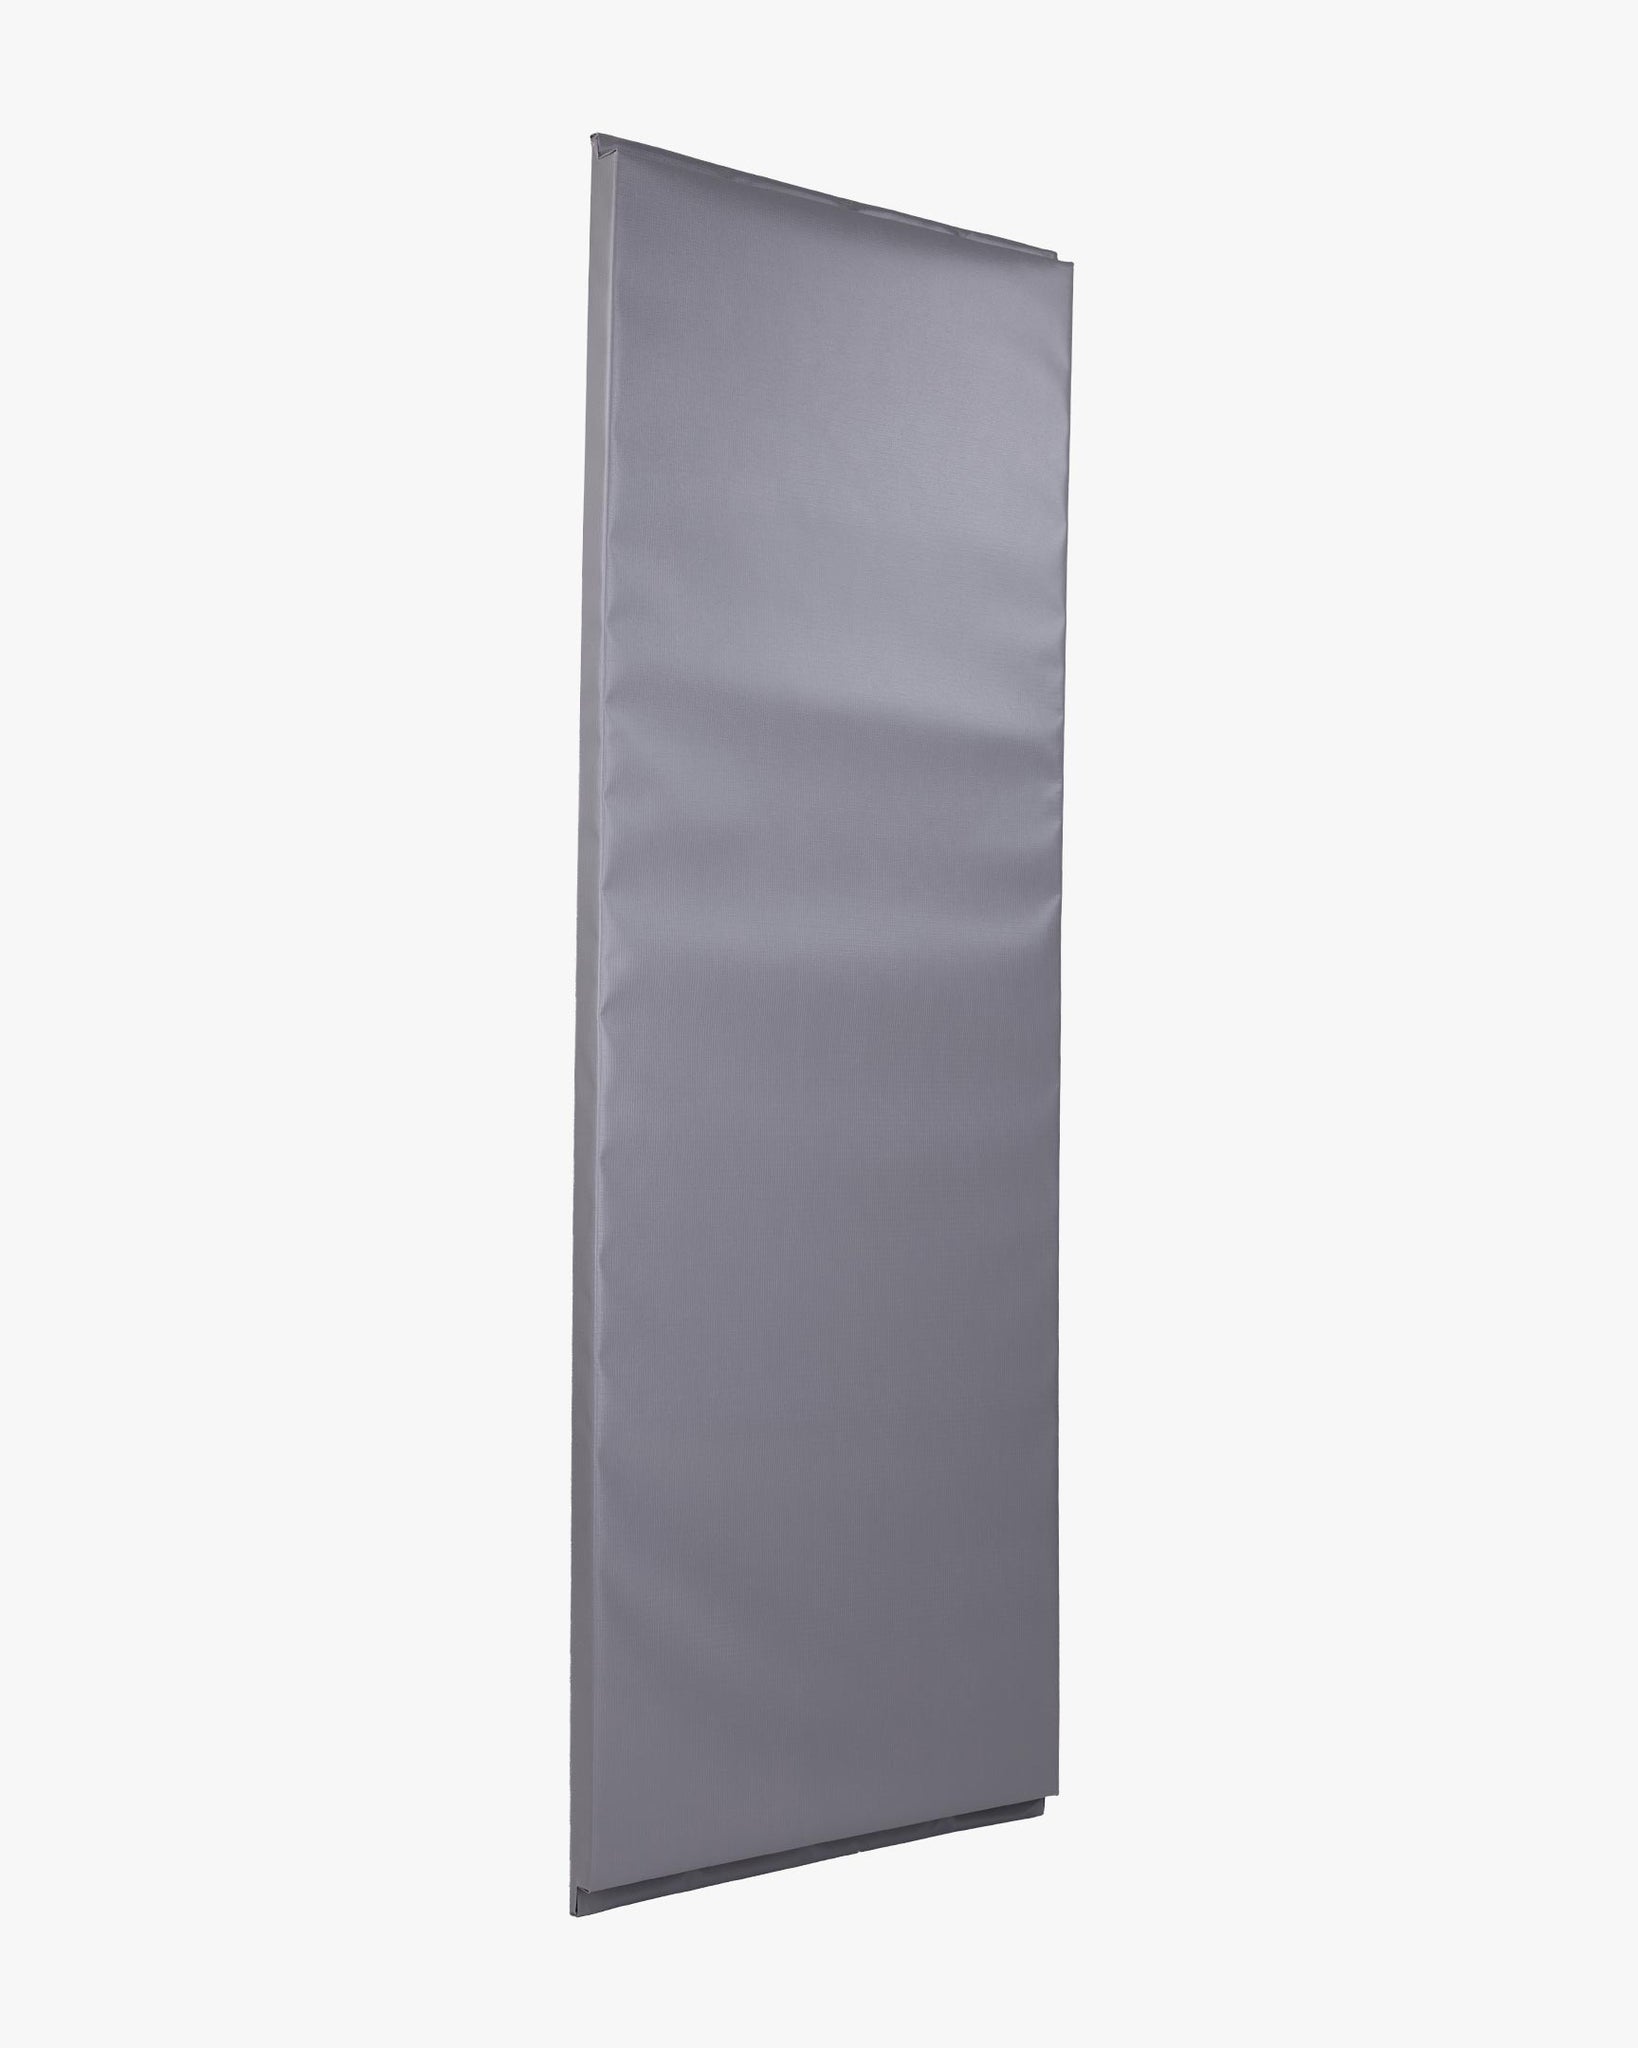 Wall Pad 2' X 6' Grey